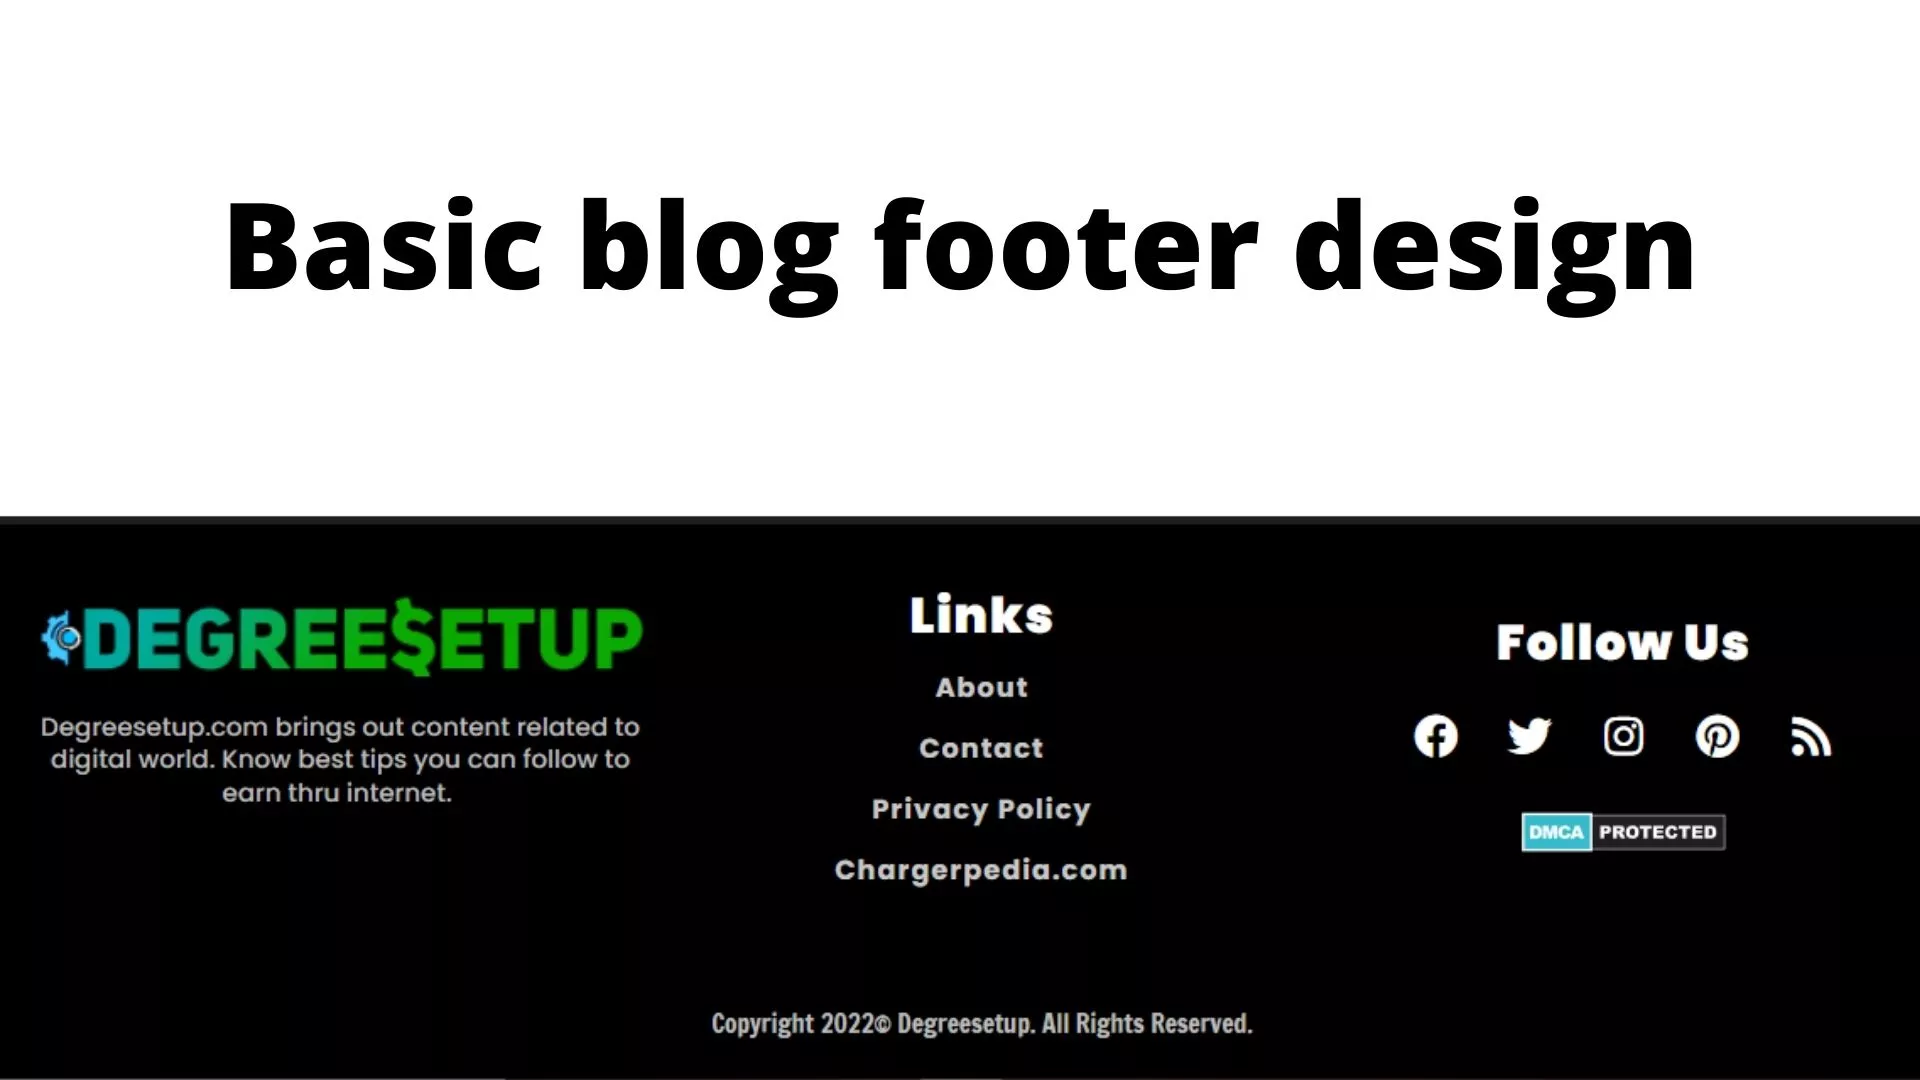 degreesetup blog footer for blog authority